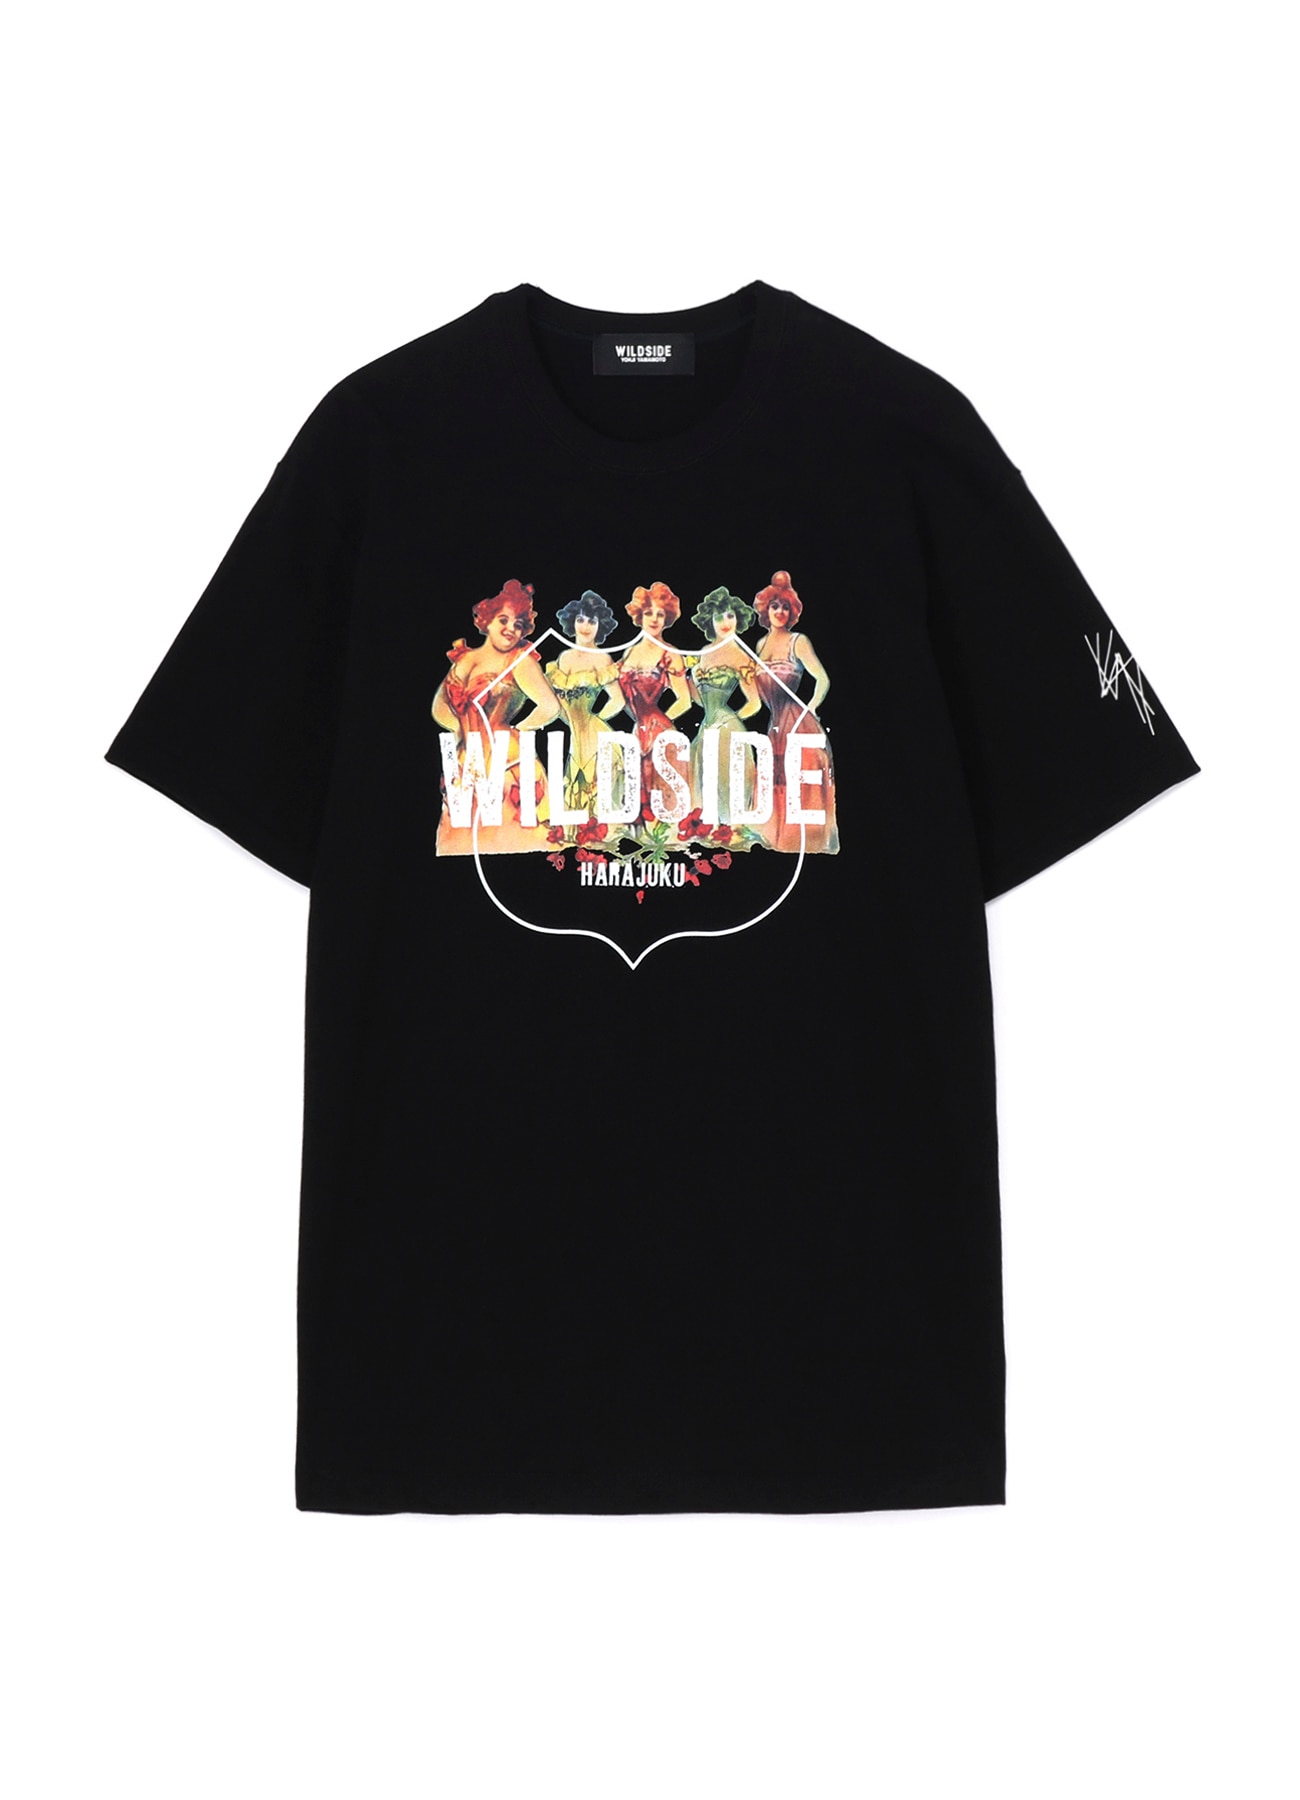 HARAJUKU Show Girl SS T-shirt(M Black): YOHJI YAMAMOTO｜WILDSIDE 